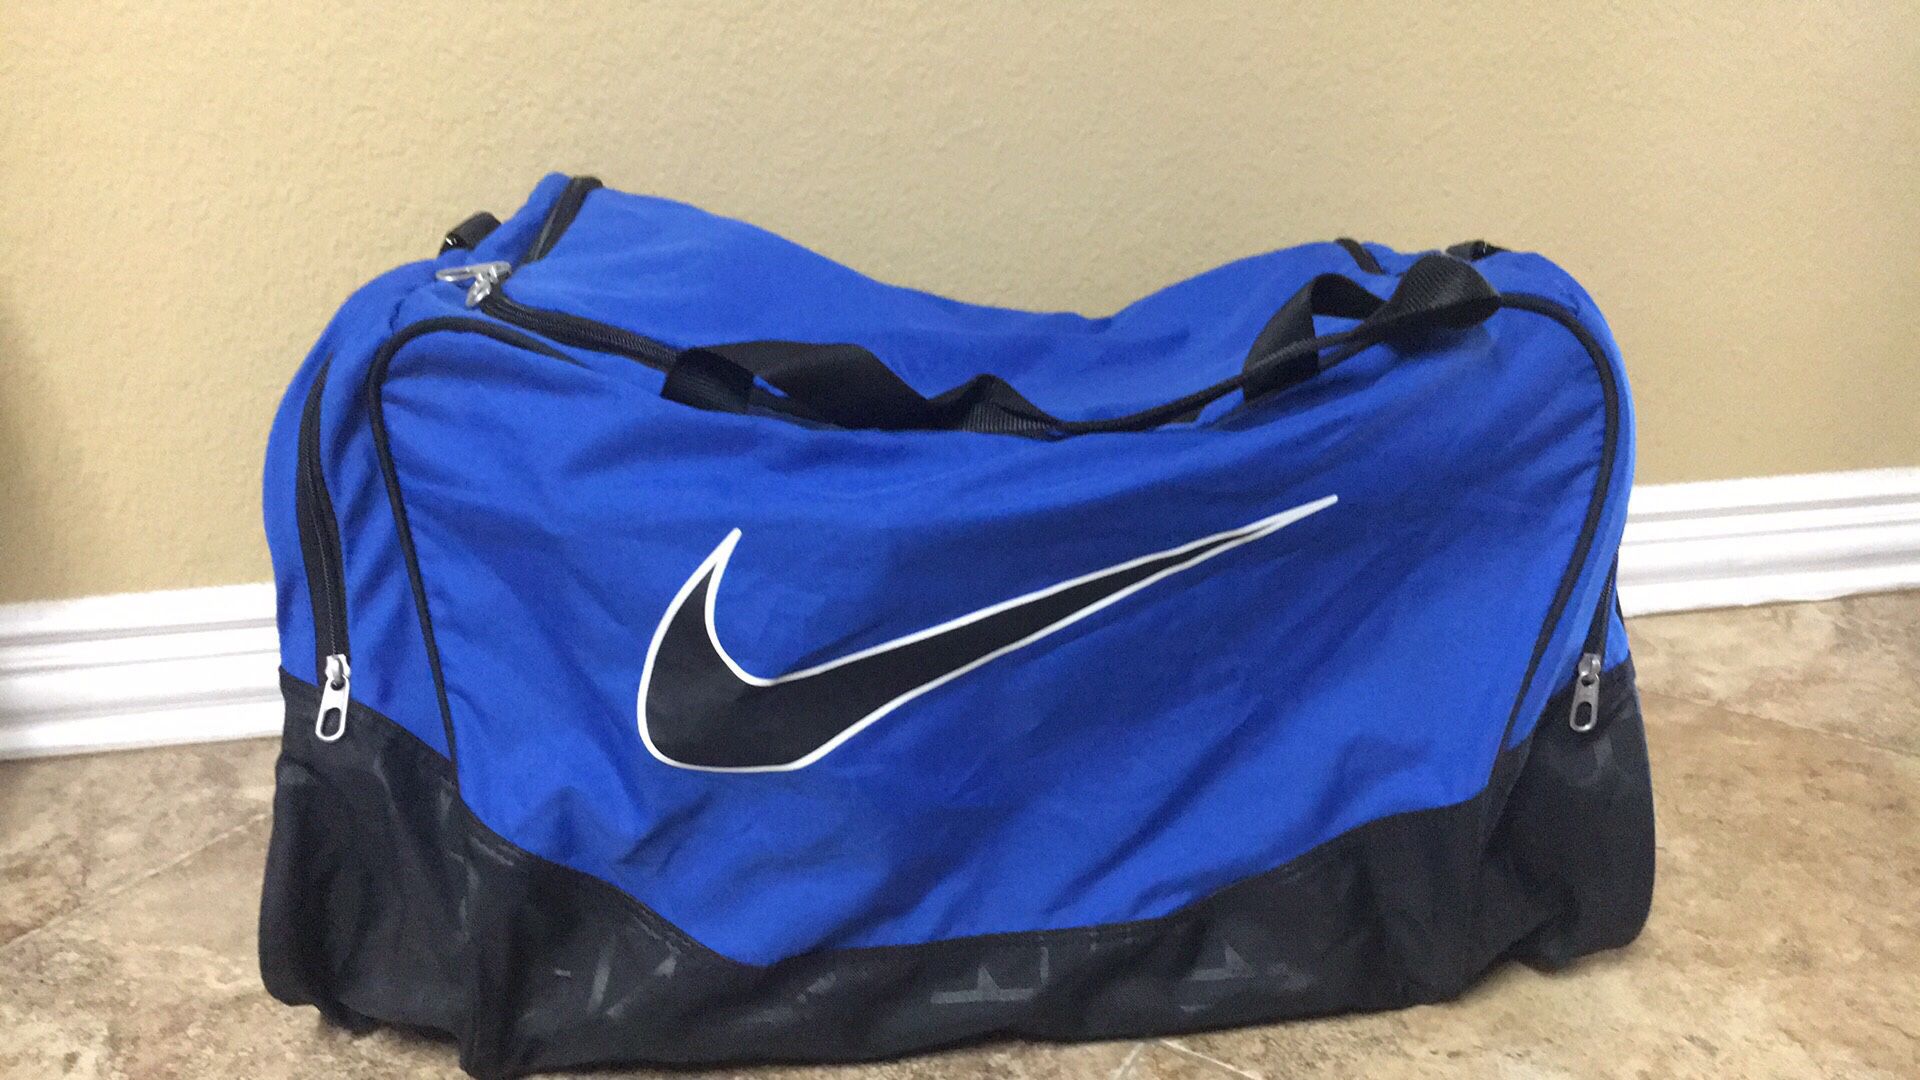 Nike large duffle bag